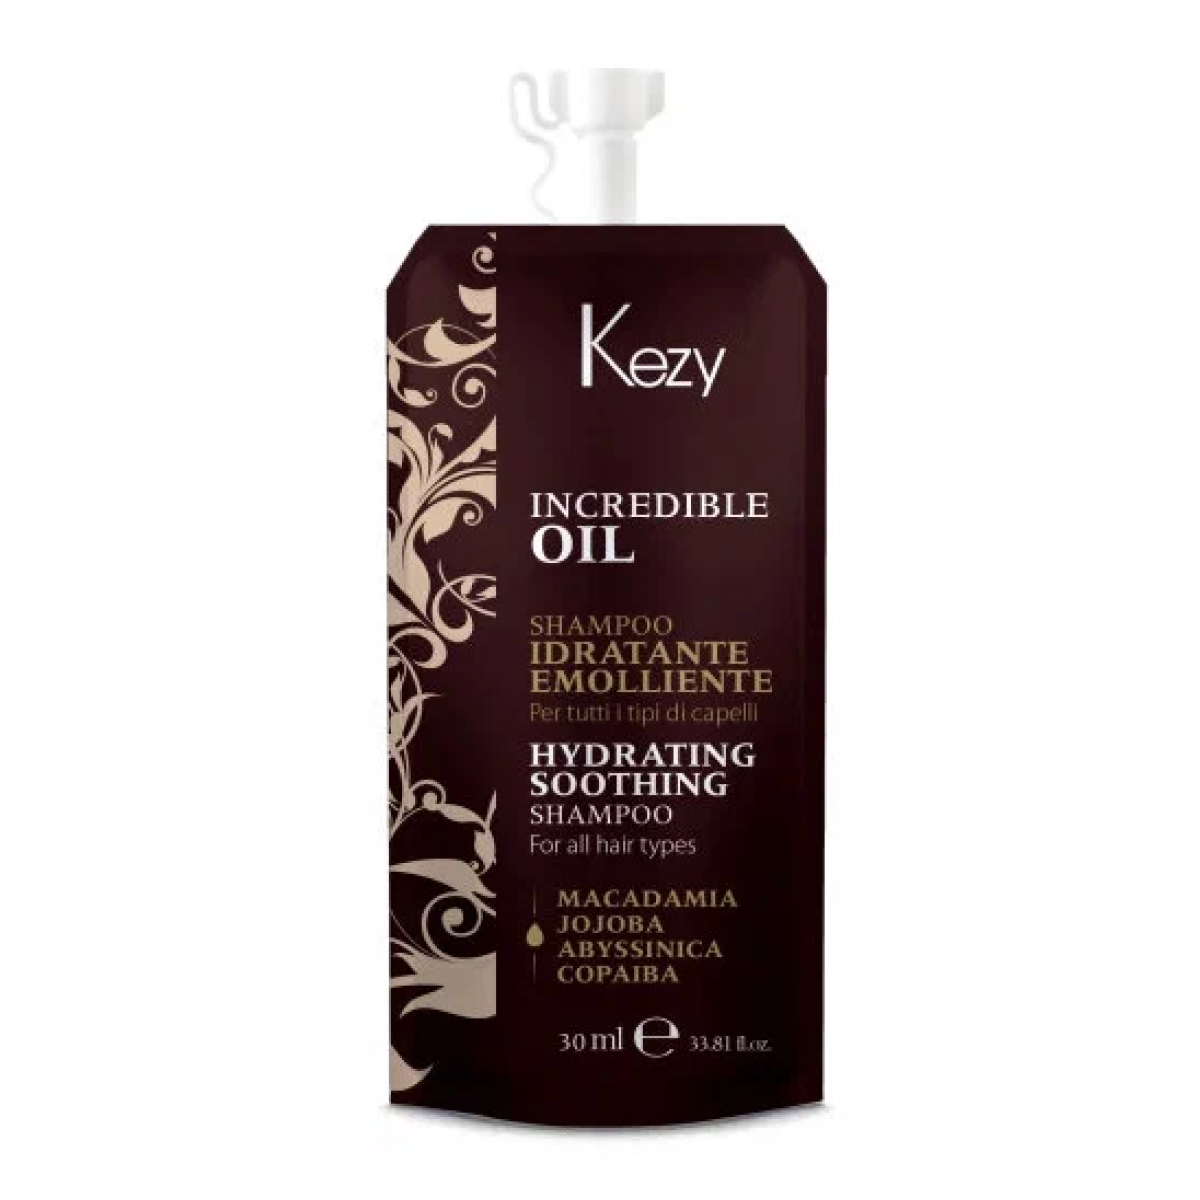 Kezy INCREDIBLE OIL Шампунь увлажняющий и разглаживающий для всех типов волос 30 мл.